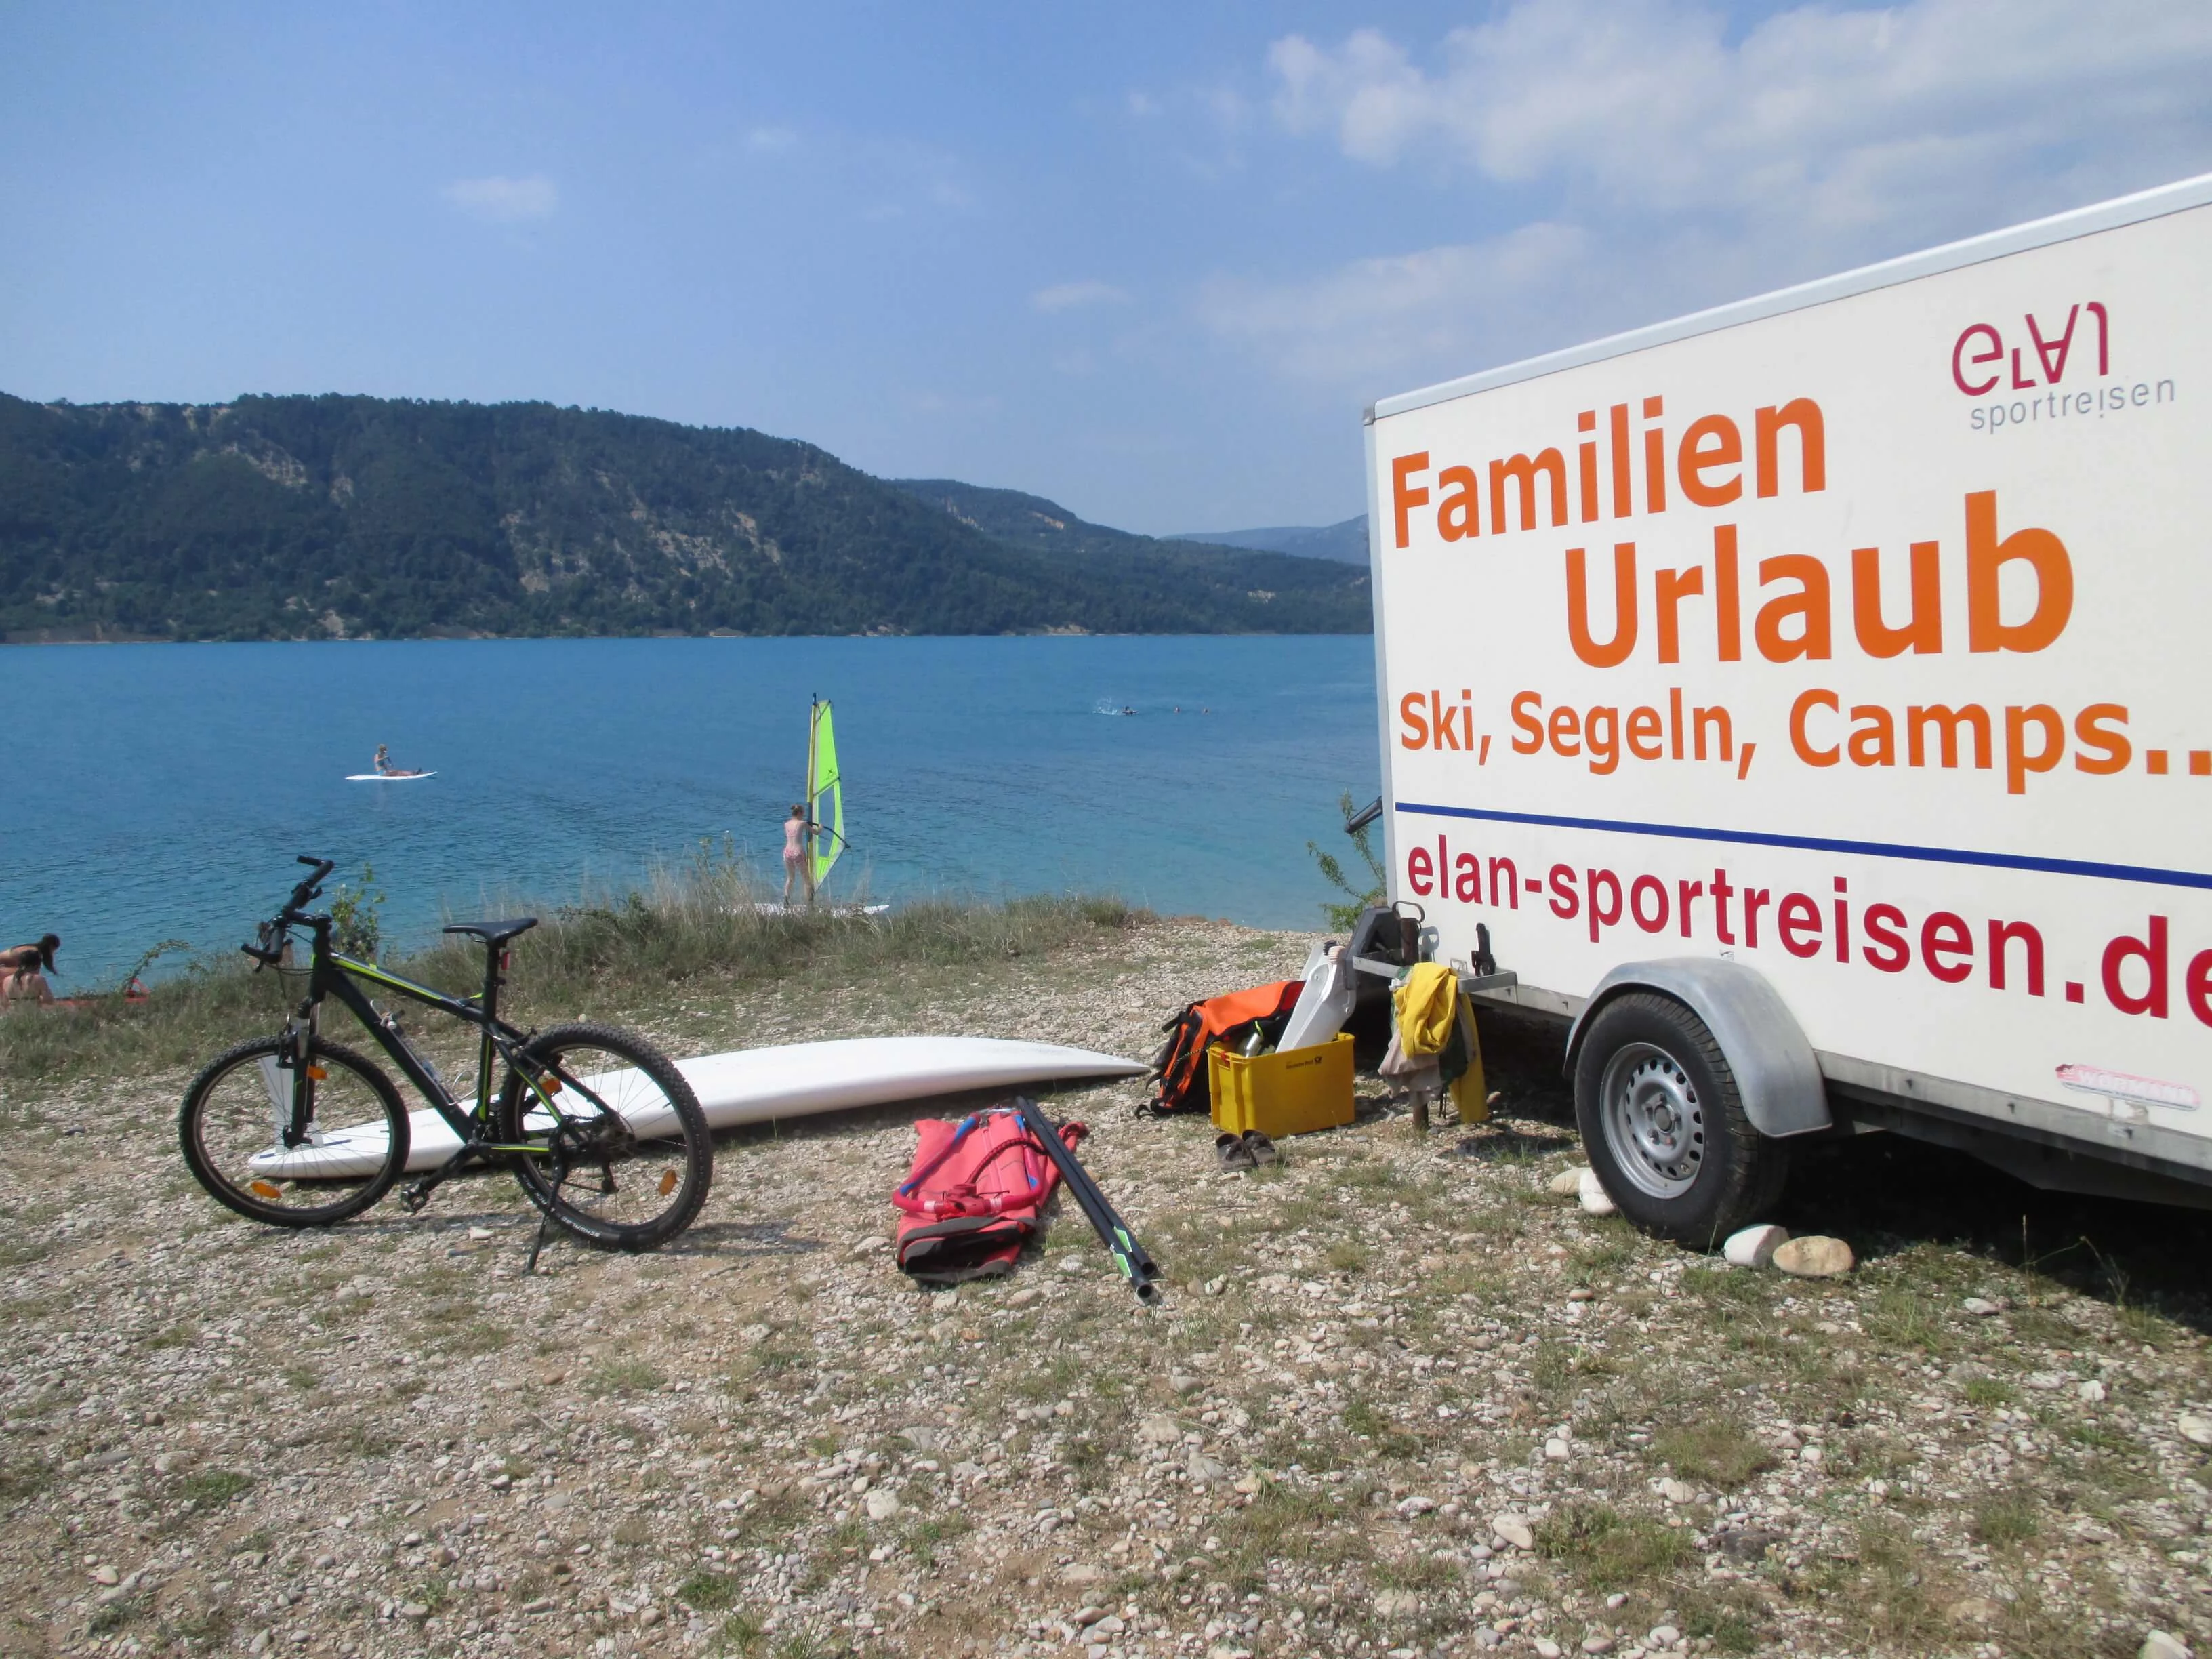 Anhänger und Material am Strand des Familiencamps in der Provence